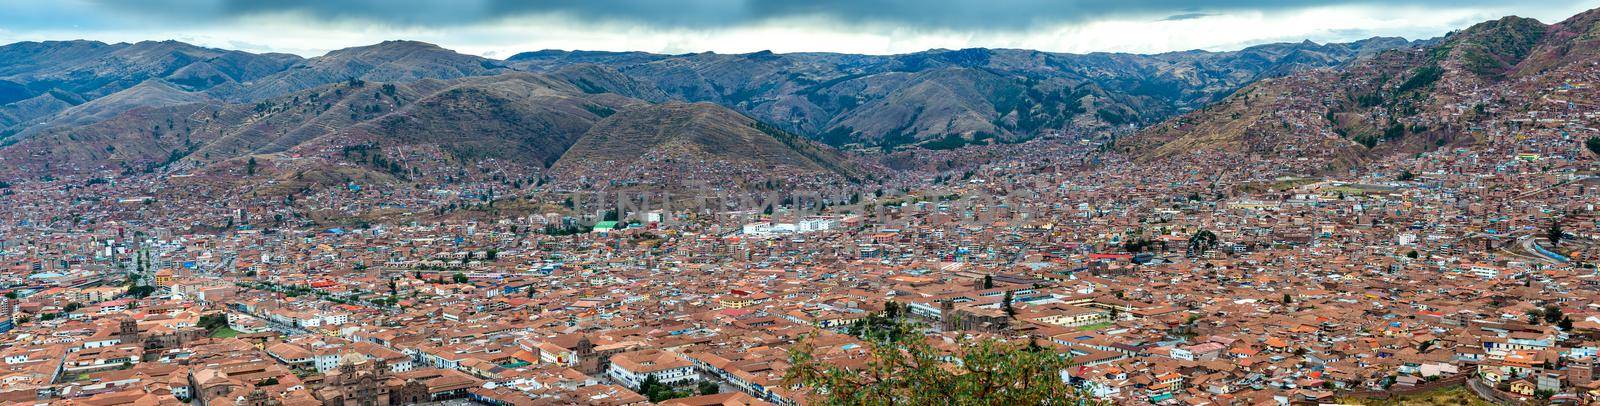 Great wide panorama view of magnificent Cusco, lost Inca city in Peru